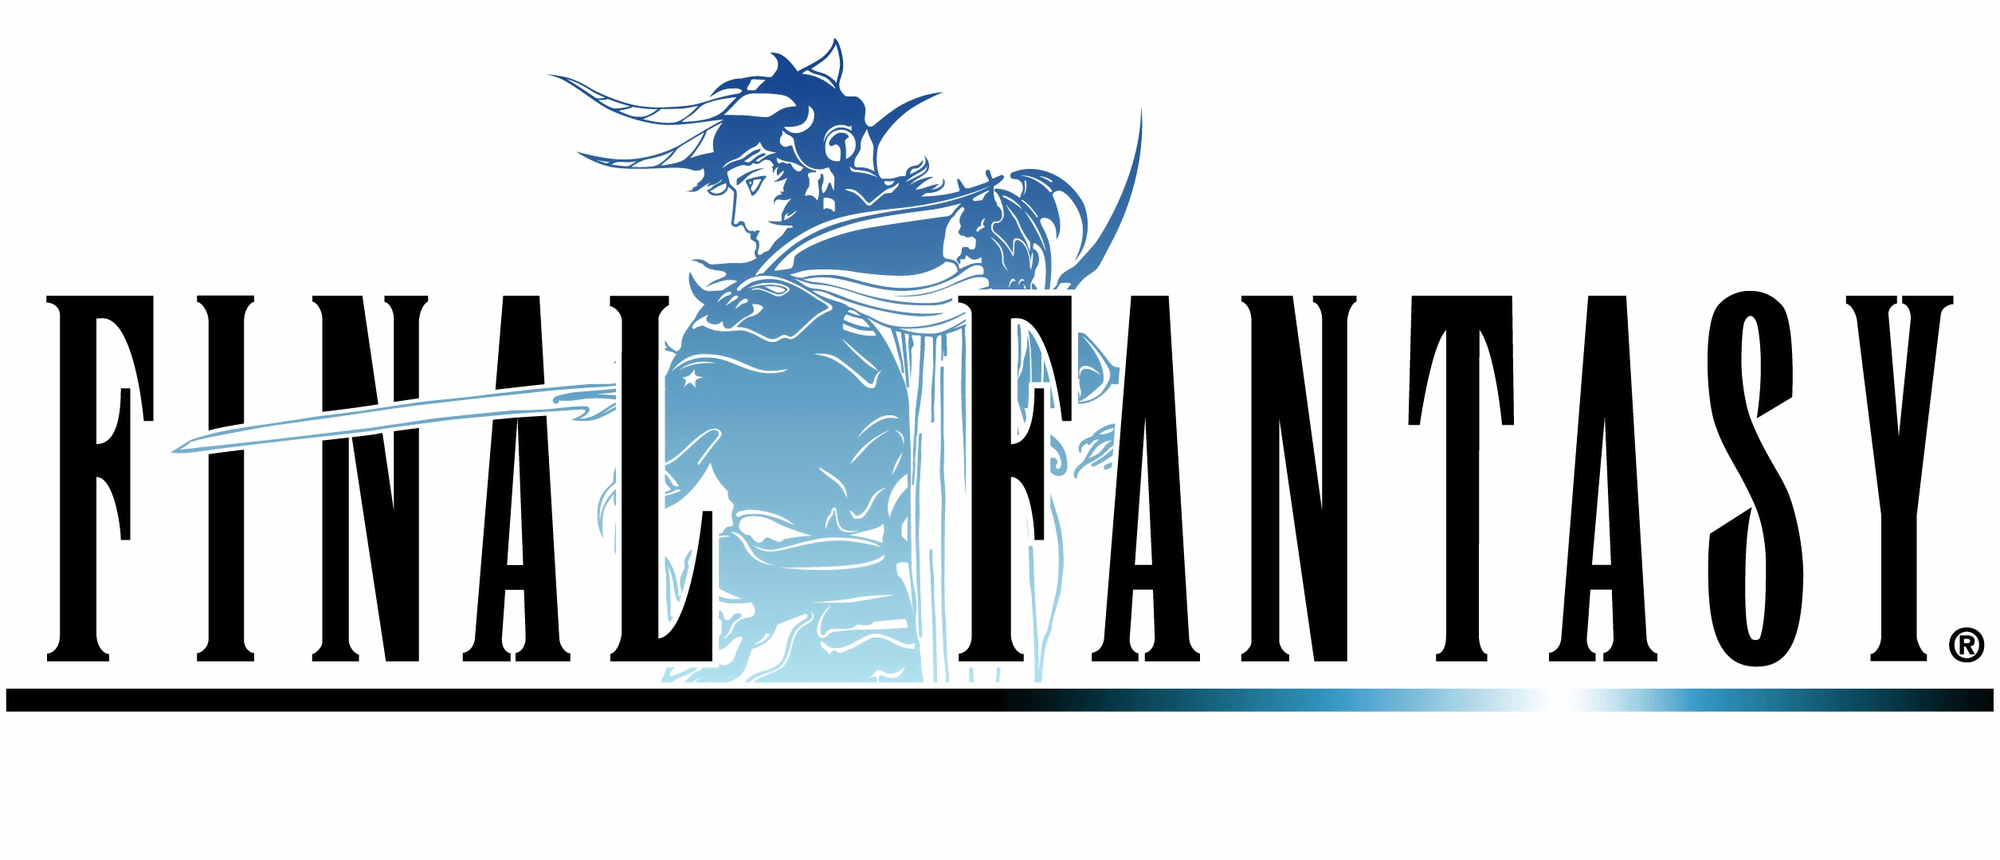 FF7 Logo - Logos of Final Fantasy | Final Fantasy Wiki | FANDOM powered by Wikia